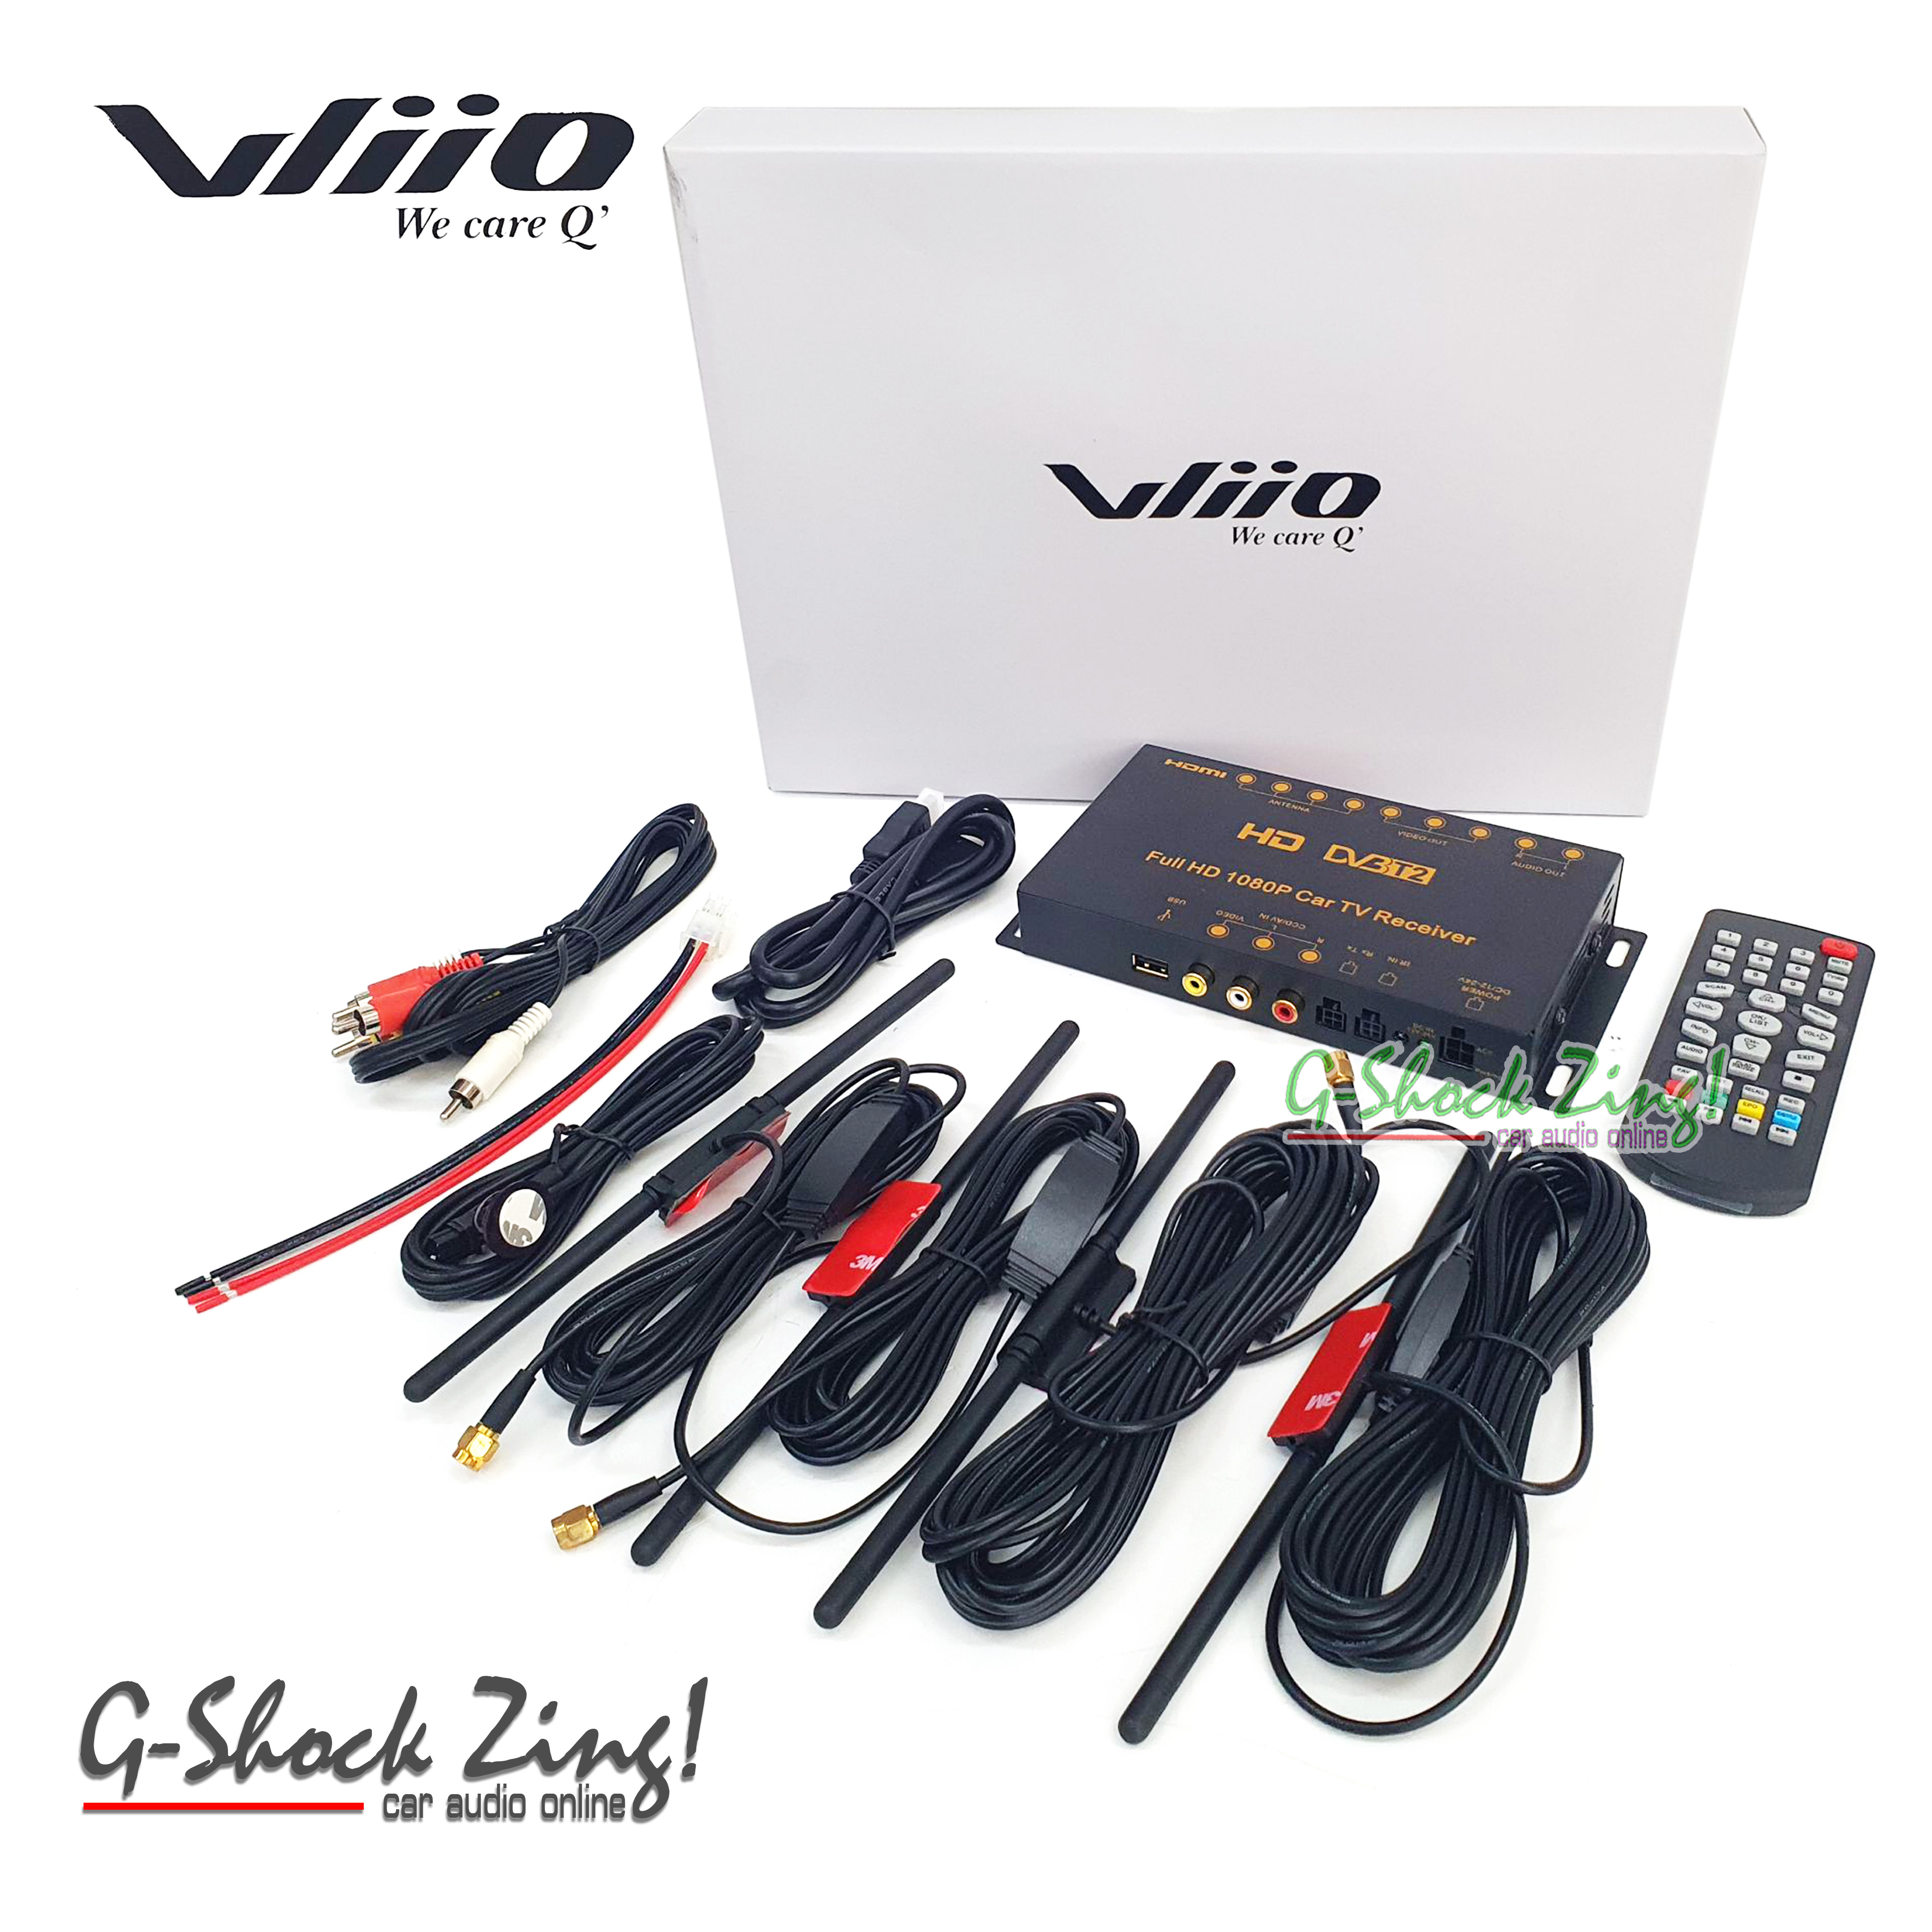 Wiio กล่องรับสัญญาณทีวีดิจิตอลติดรถยนต์ 4 เสา 4 จูนเนอร์ รองรับความเร็วได้ถึง 180 km/h ภาพคมชัด สัญญาณเสถียร มีช่องต่อ HDMI และ USB WIIO รุ่น HD-DVB T2